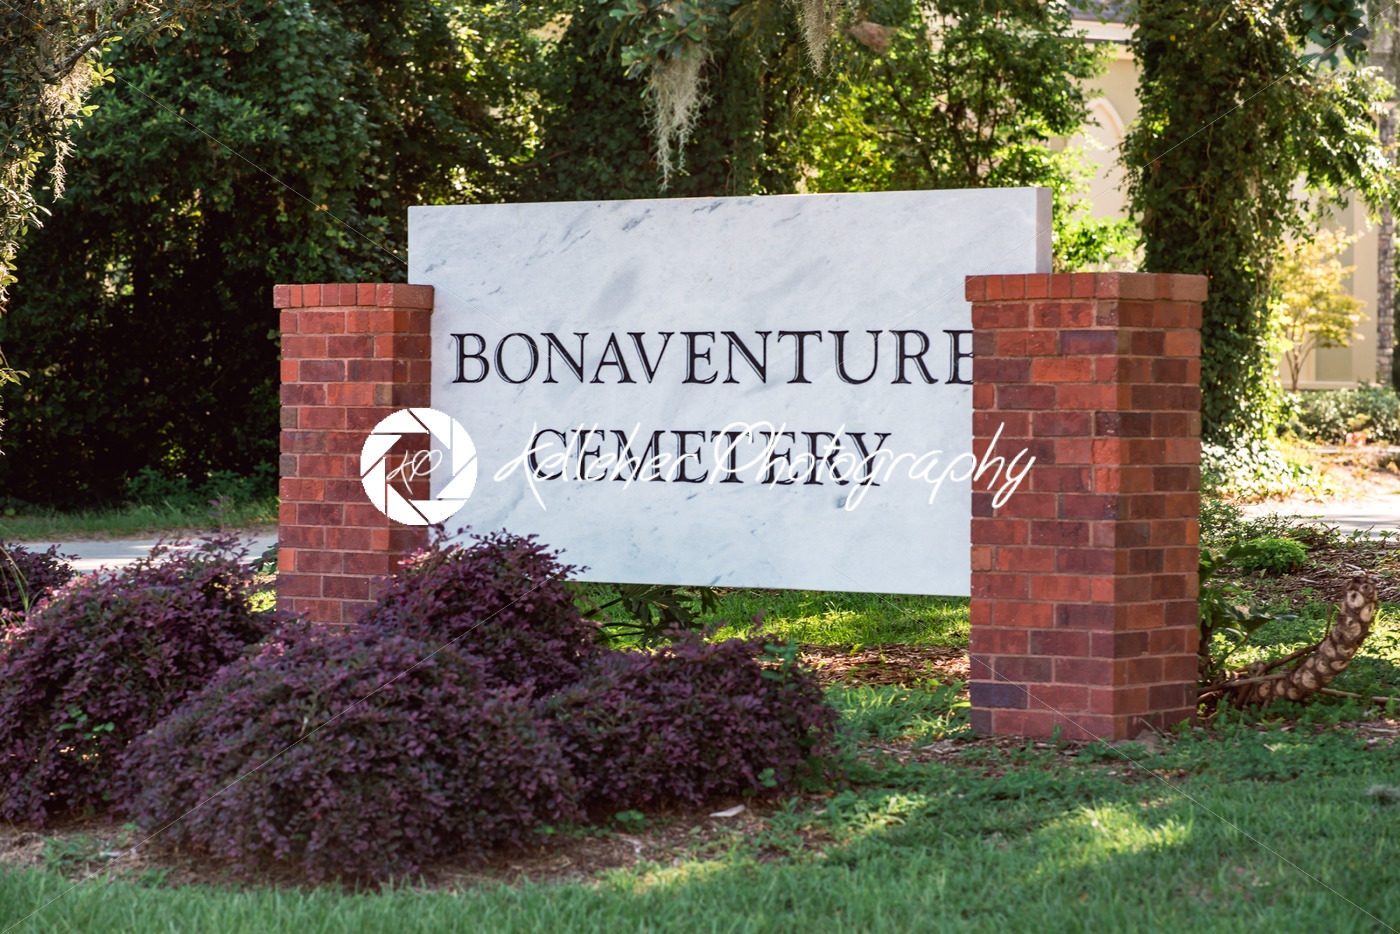 Monument sign at entrance to Bonaventure Cemetery Savannah Georgia - Kelleher Photography Store